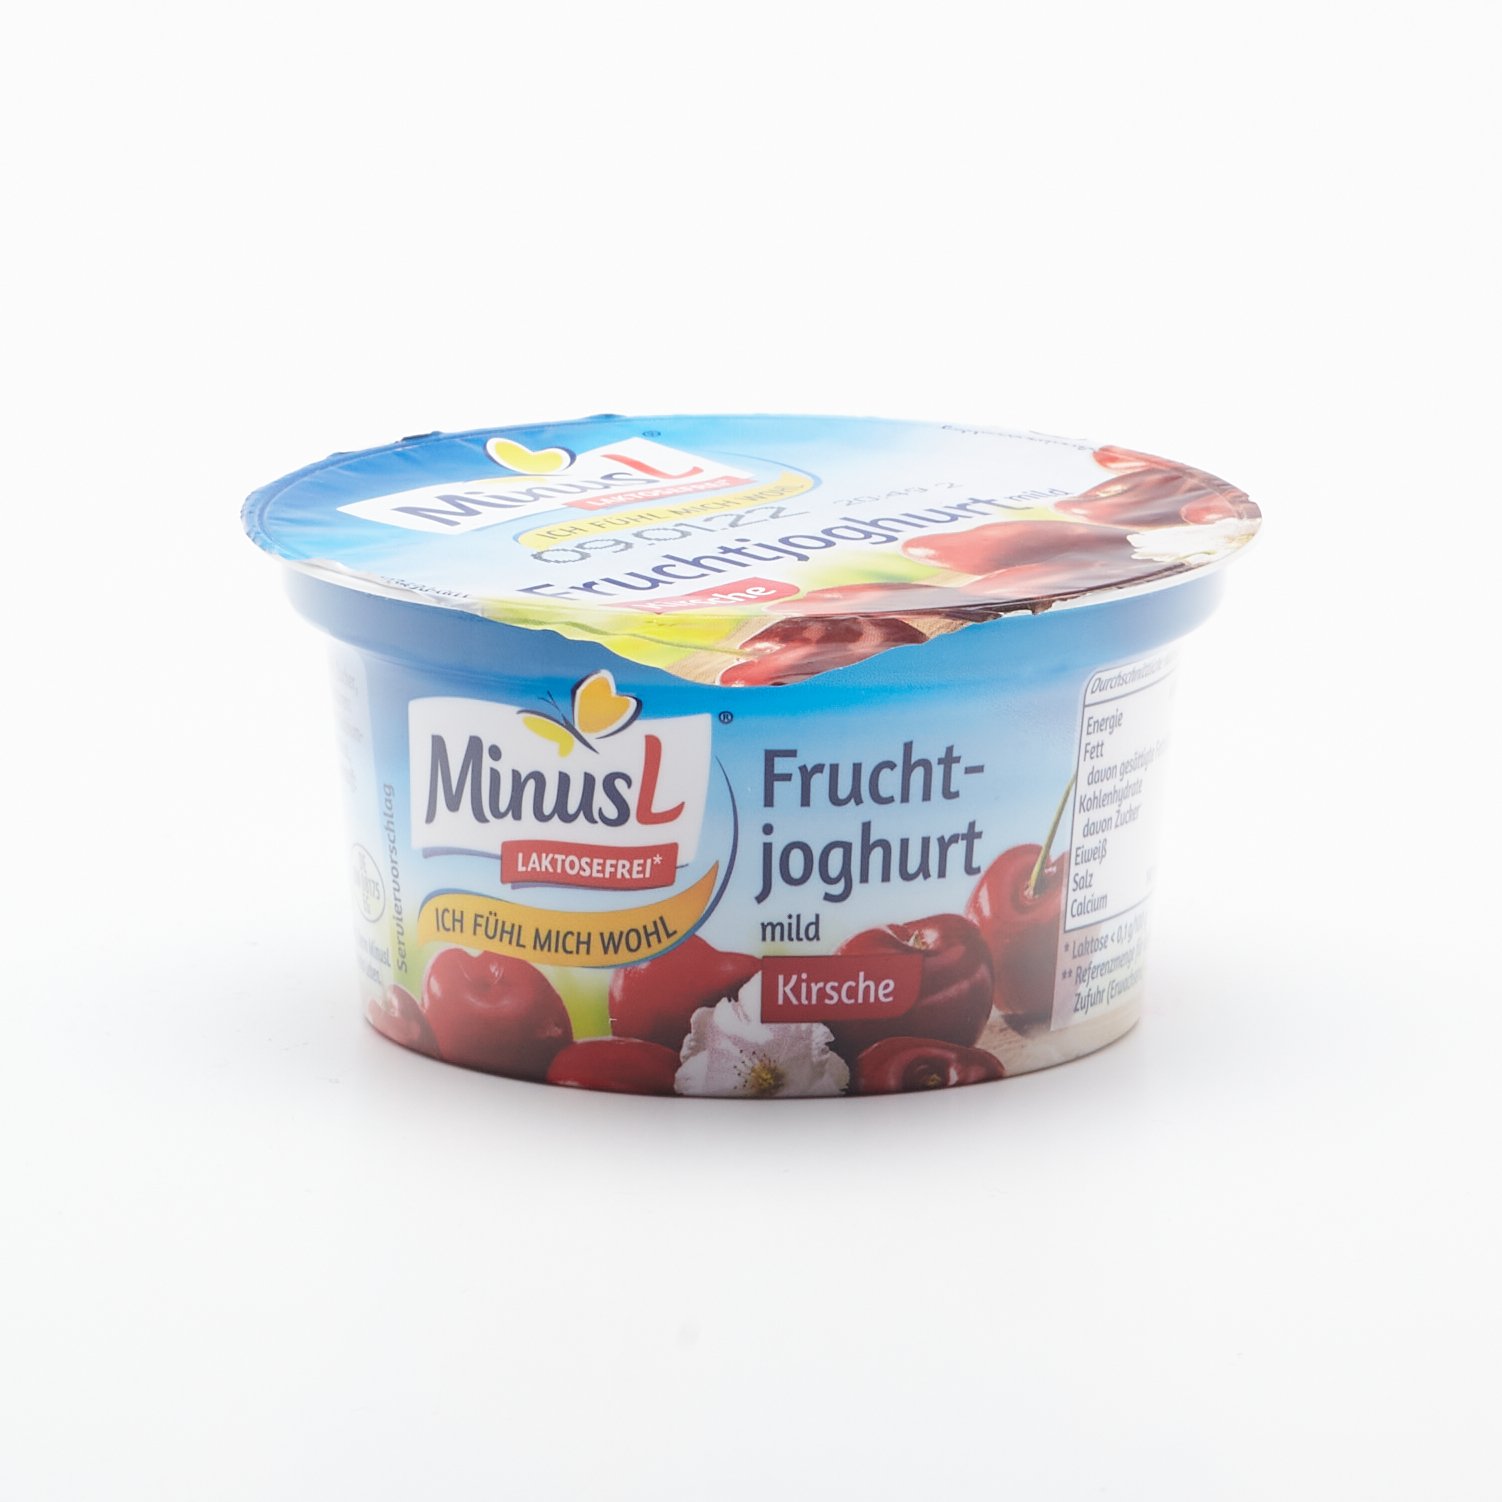 Minus L jogurt ovocný mix 150g